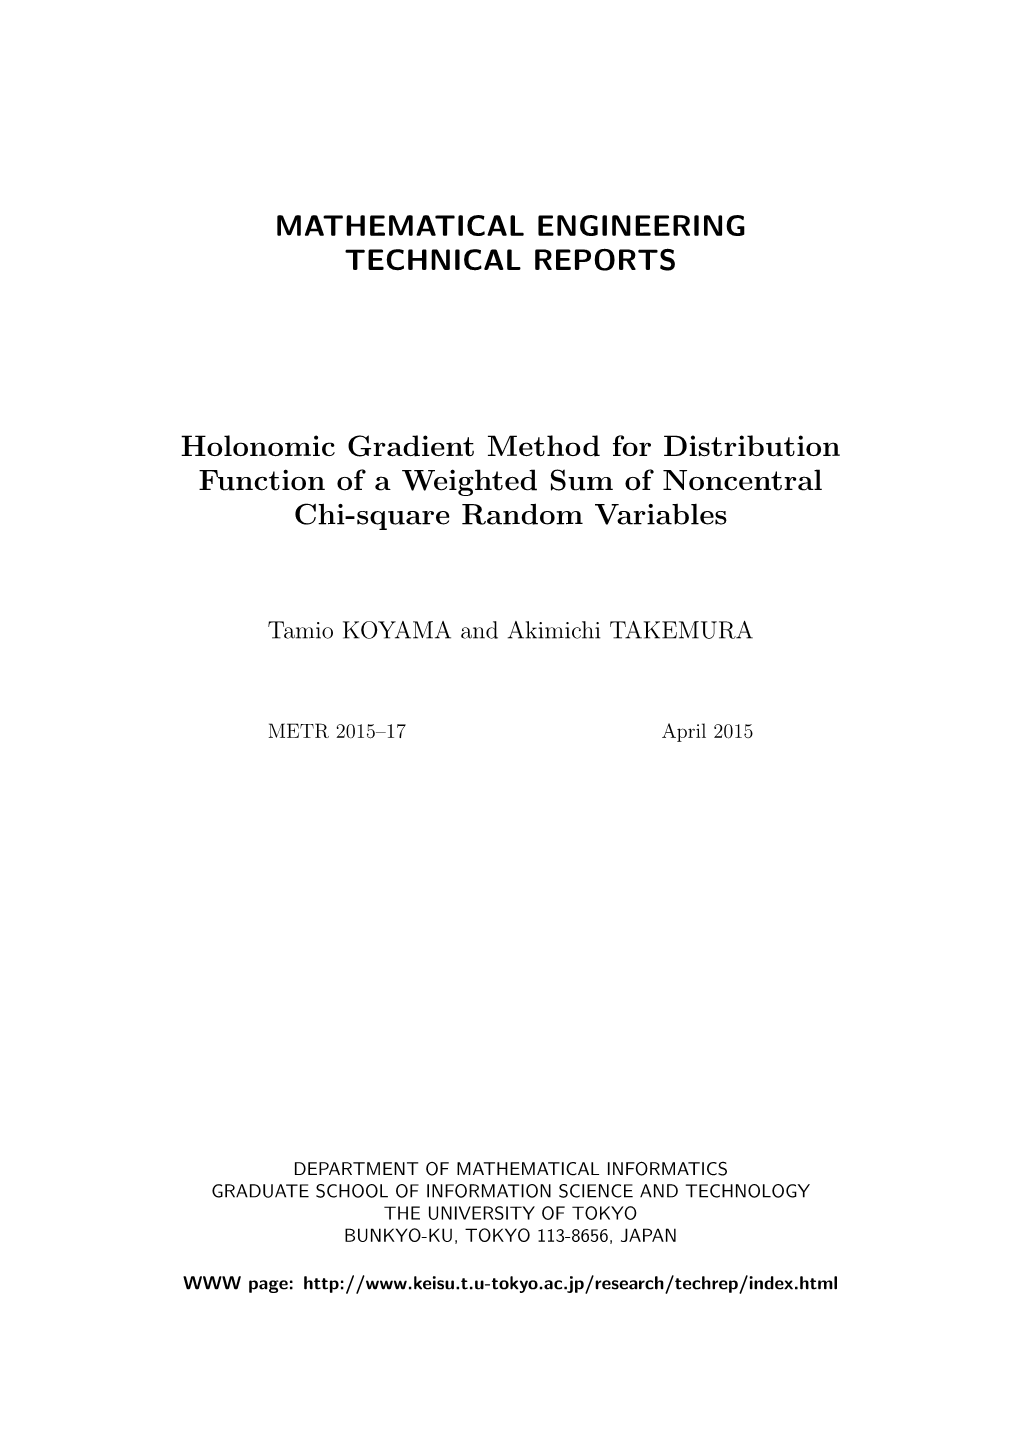 MATHEMATICAL ENGINEERING TECHNICAL REPORTS Holonomic